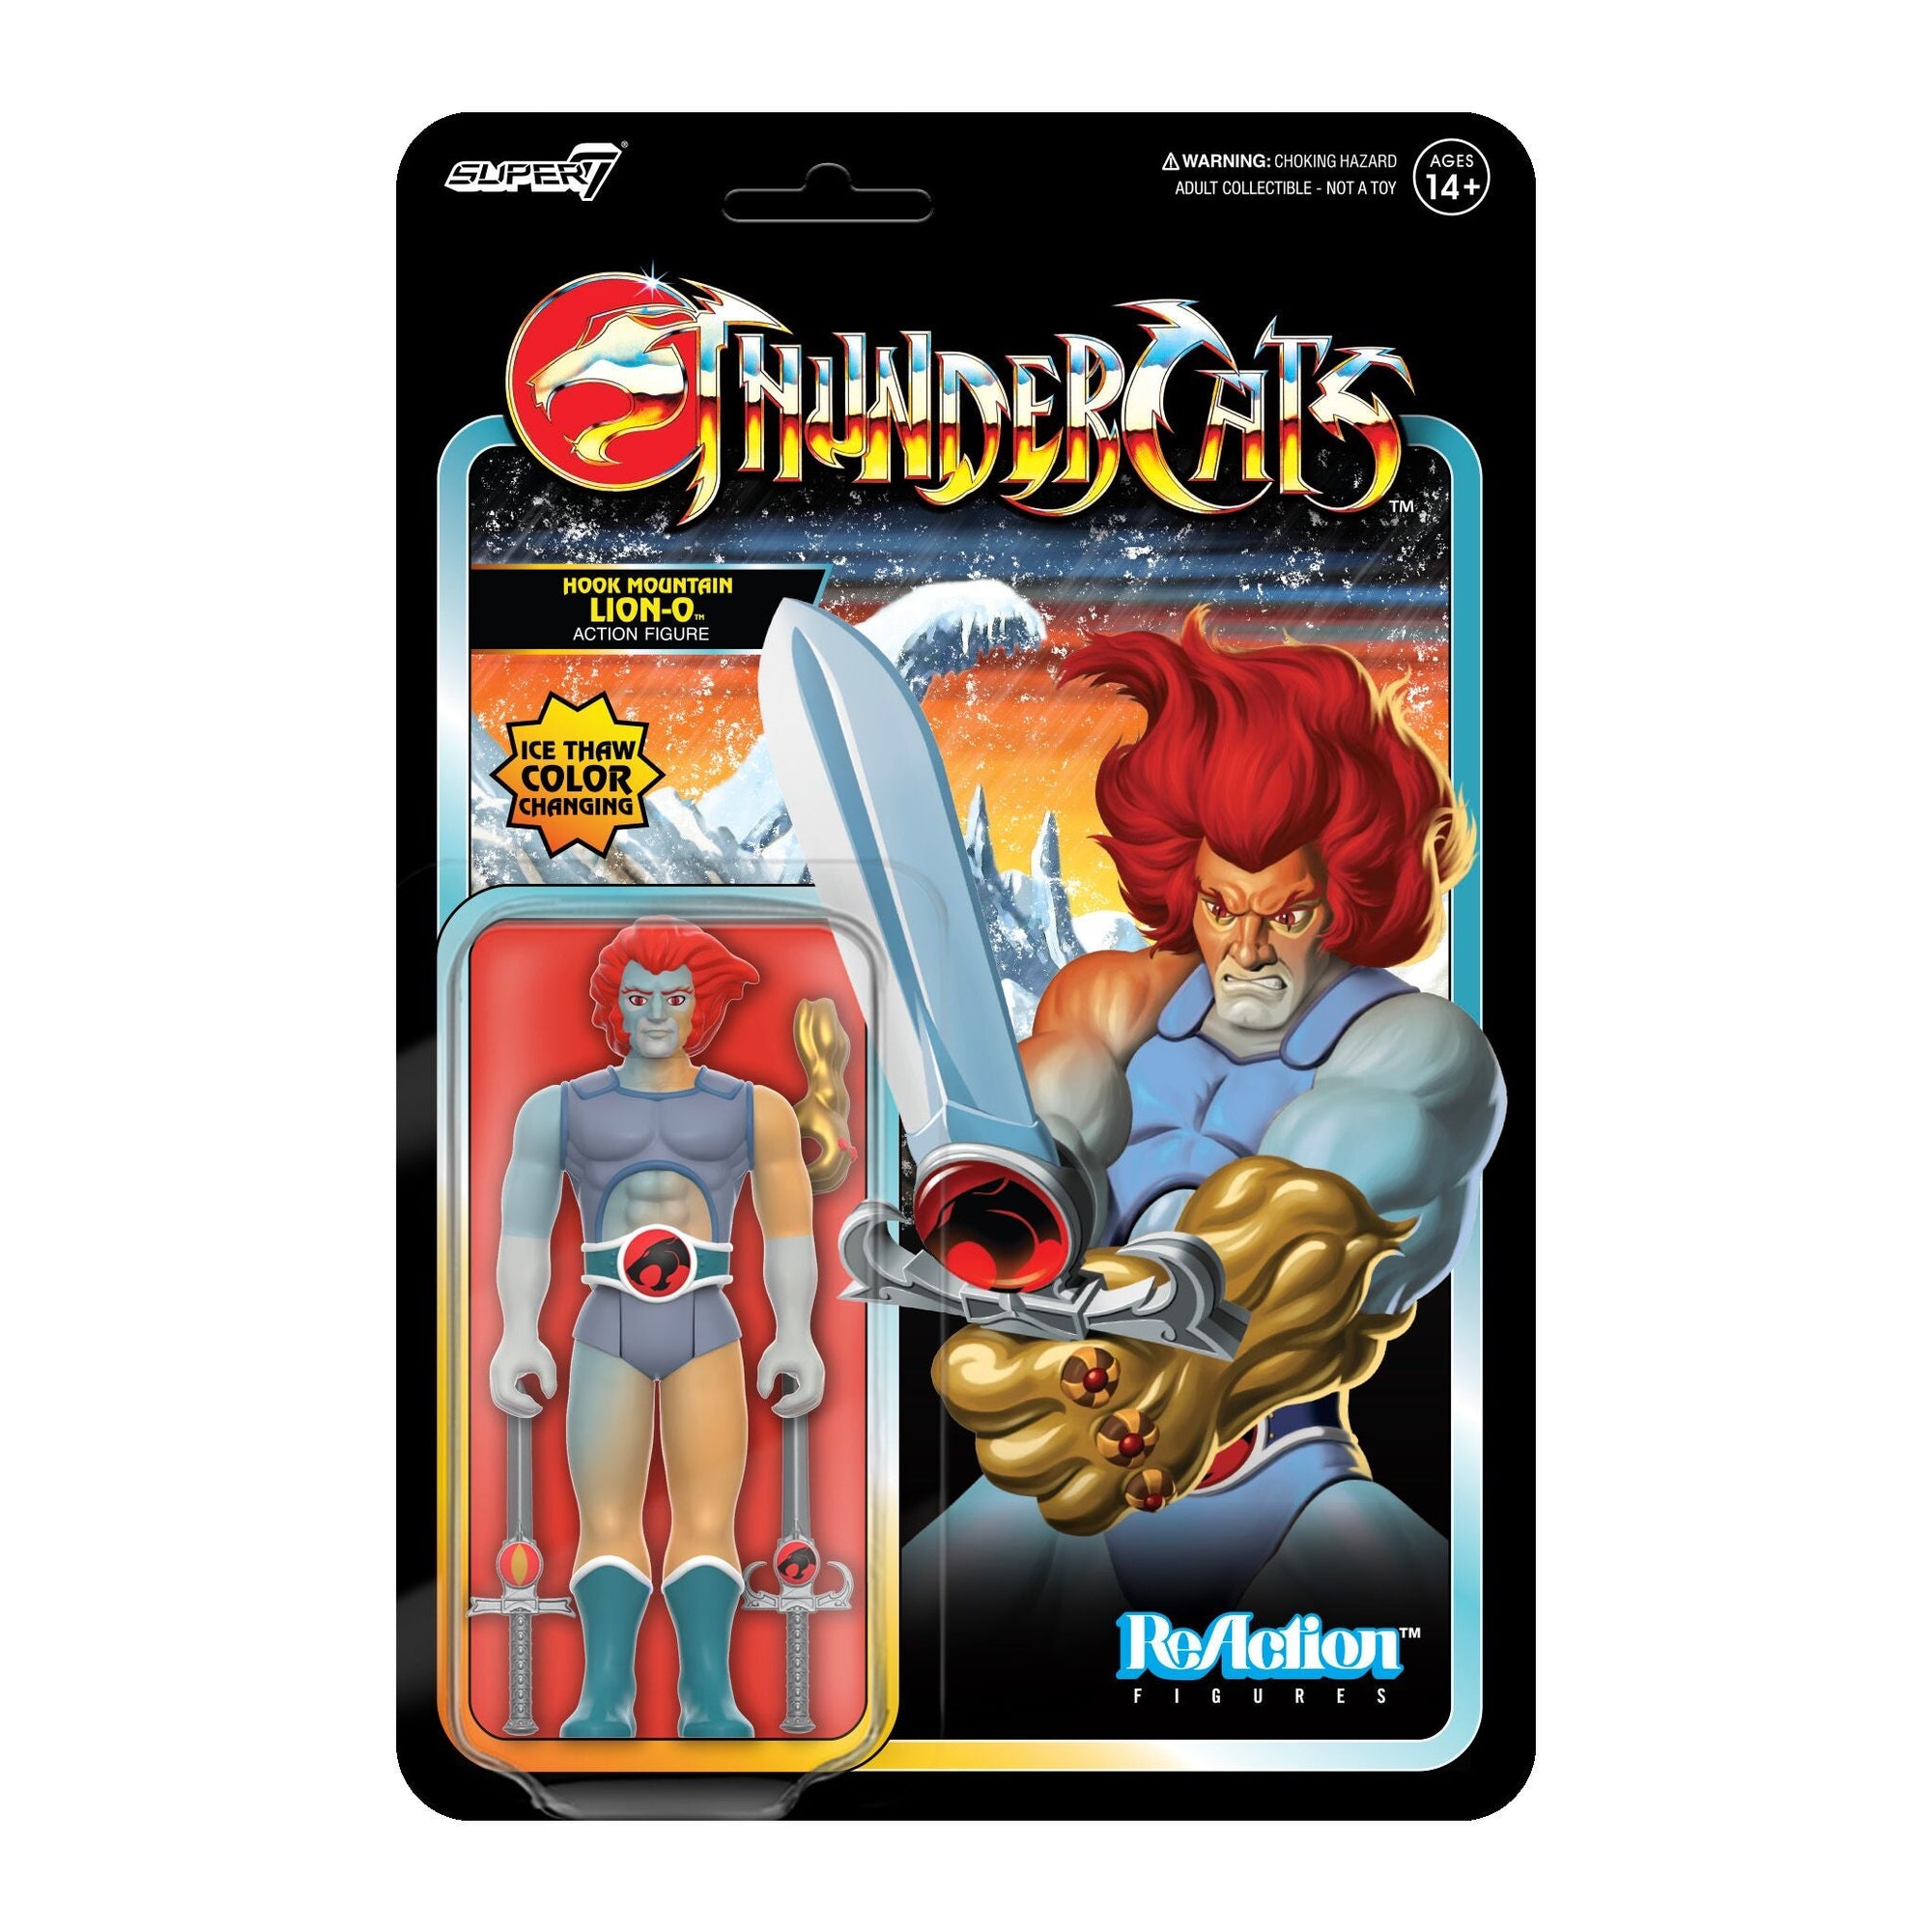 Hook Mountain Lion-O (Color Change) ReAction Figure - Thundercats by Super7